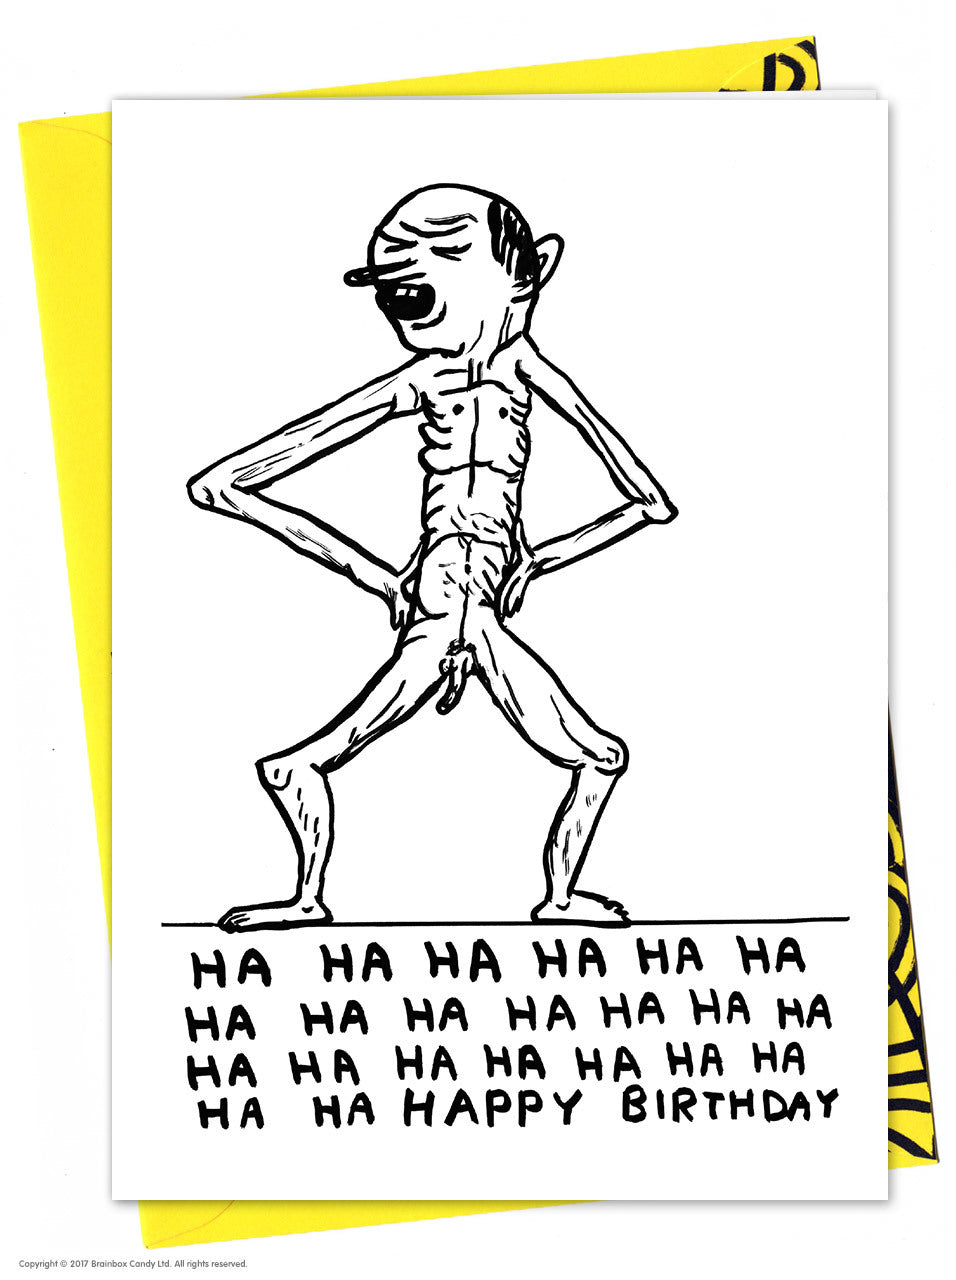 Ha Ha Ha Ha Ha Ha Happy Birthday Card by David Shrigley